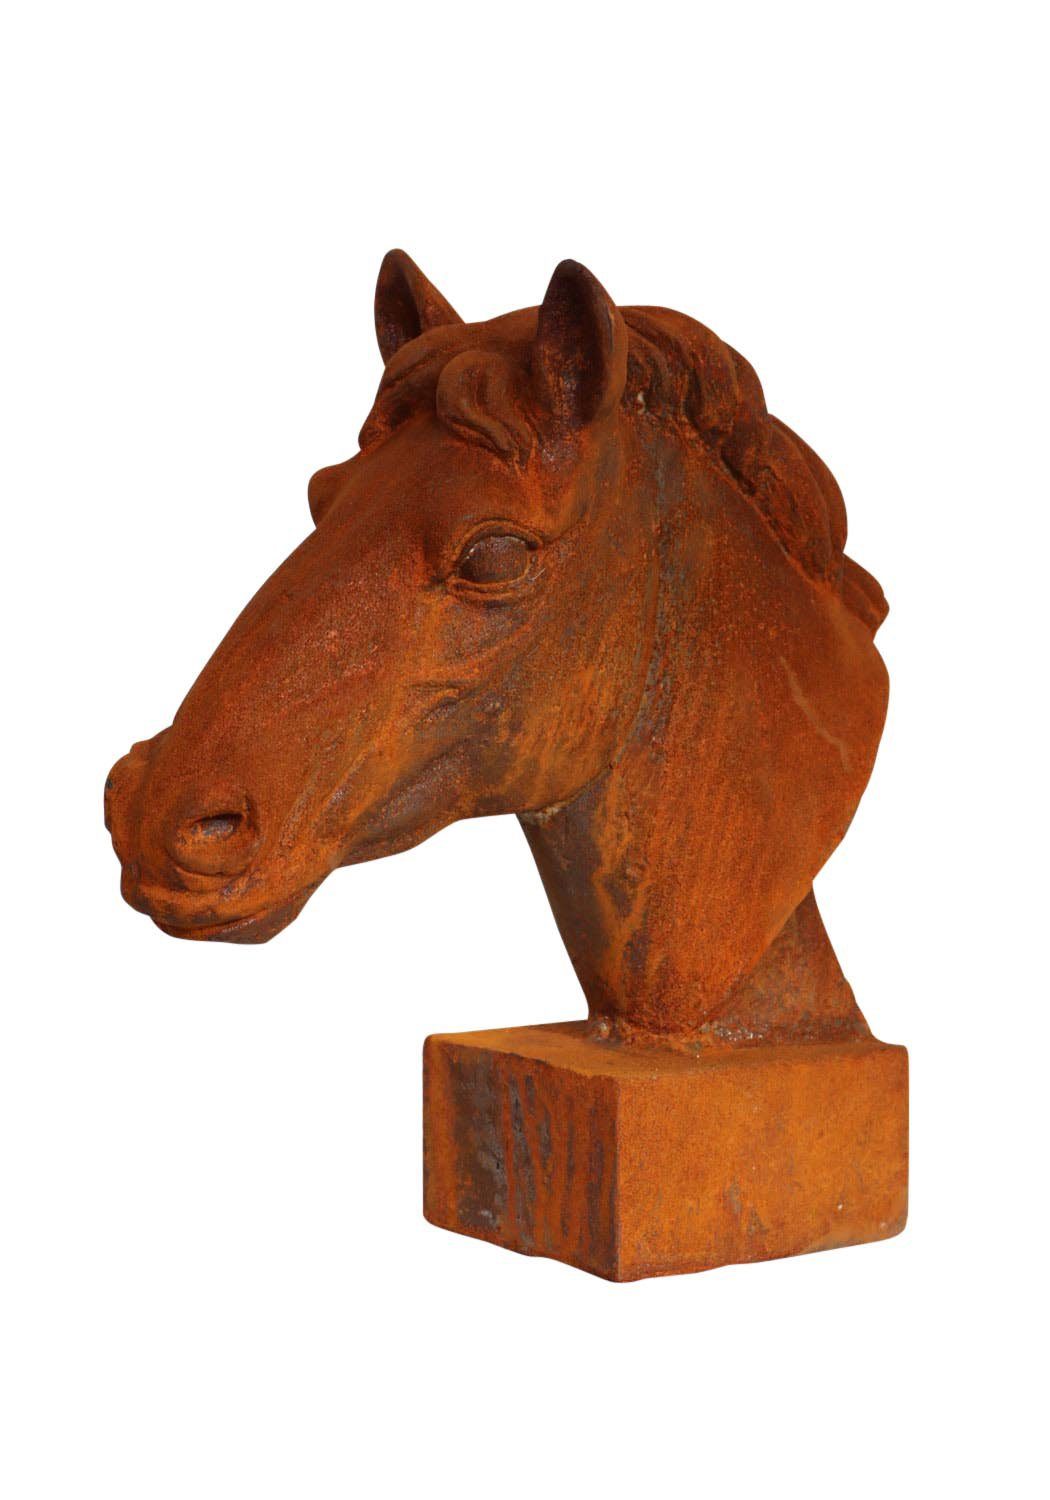 Aubaho Gartenfigur Skulptur Pferdekopf Eisen Statue horse Pferd sculpture Figur Büst iron